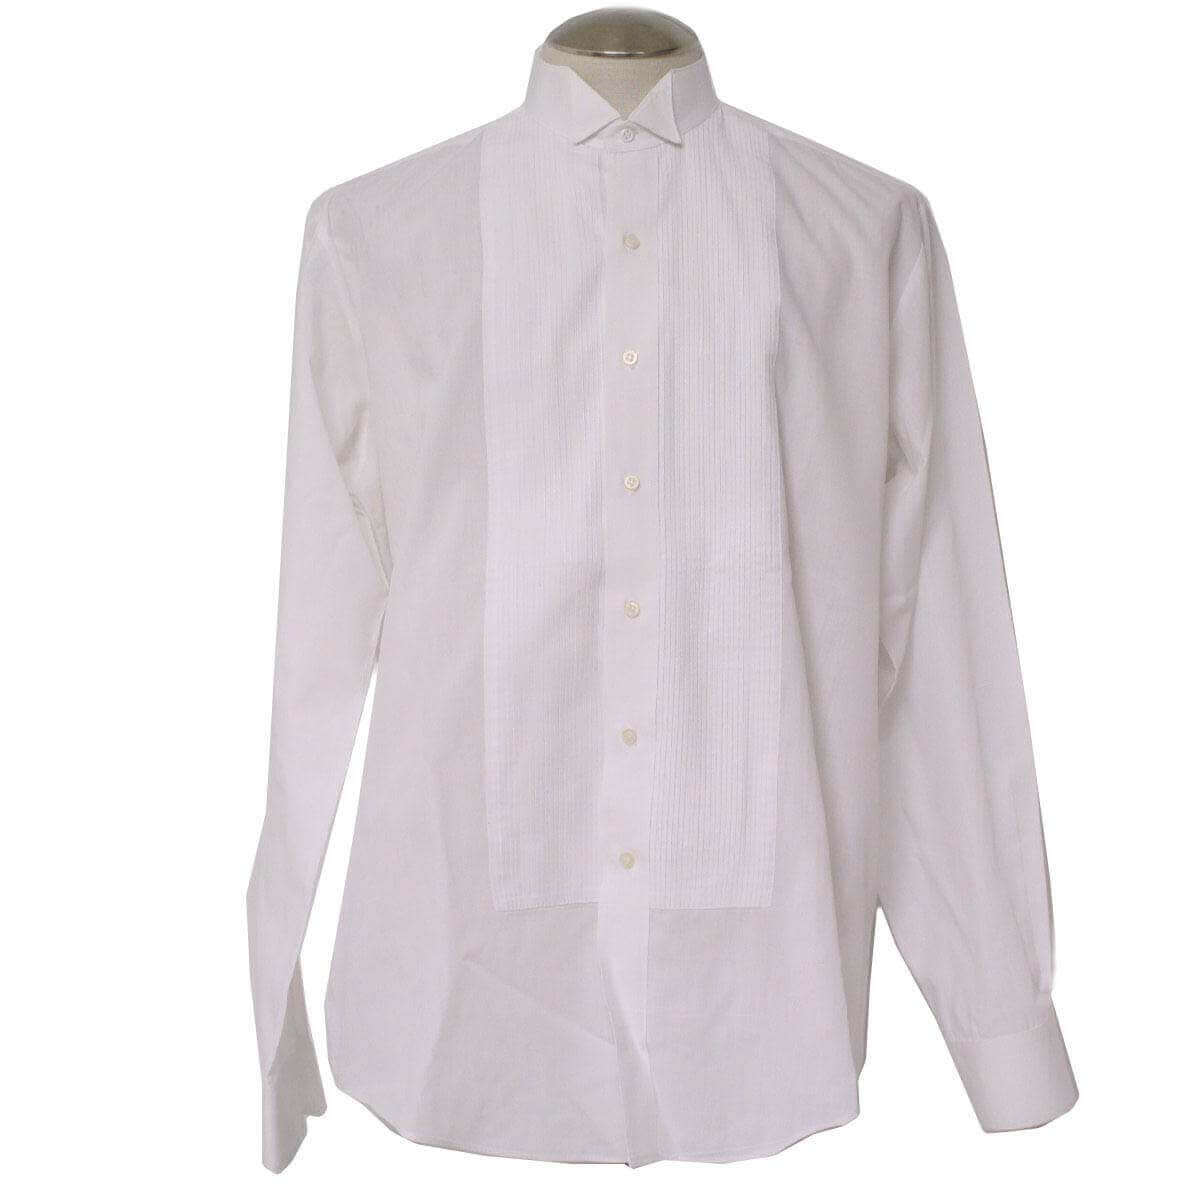 Formal Kilt Shirt | Kilts-n-Stuff.com